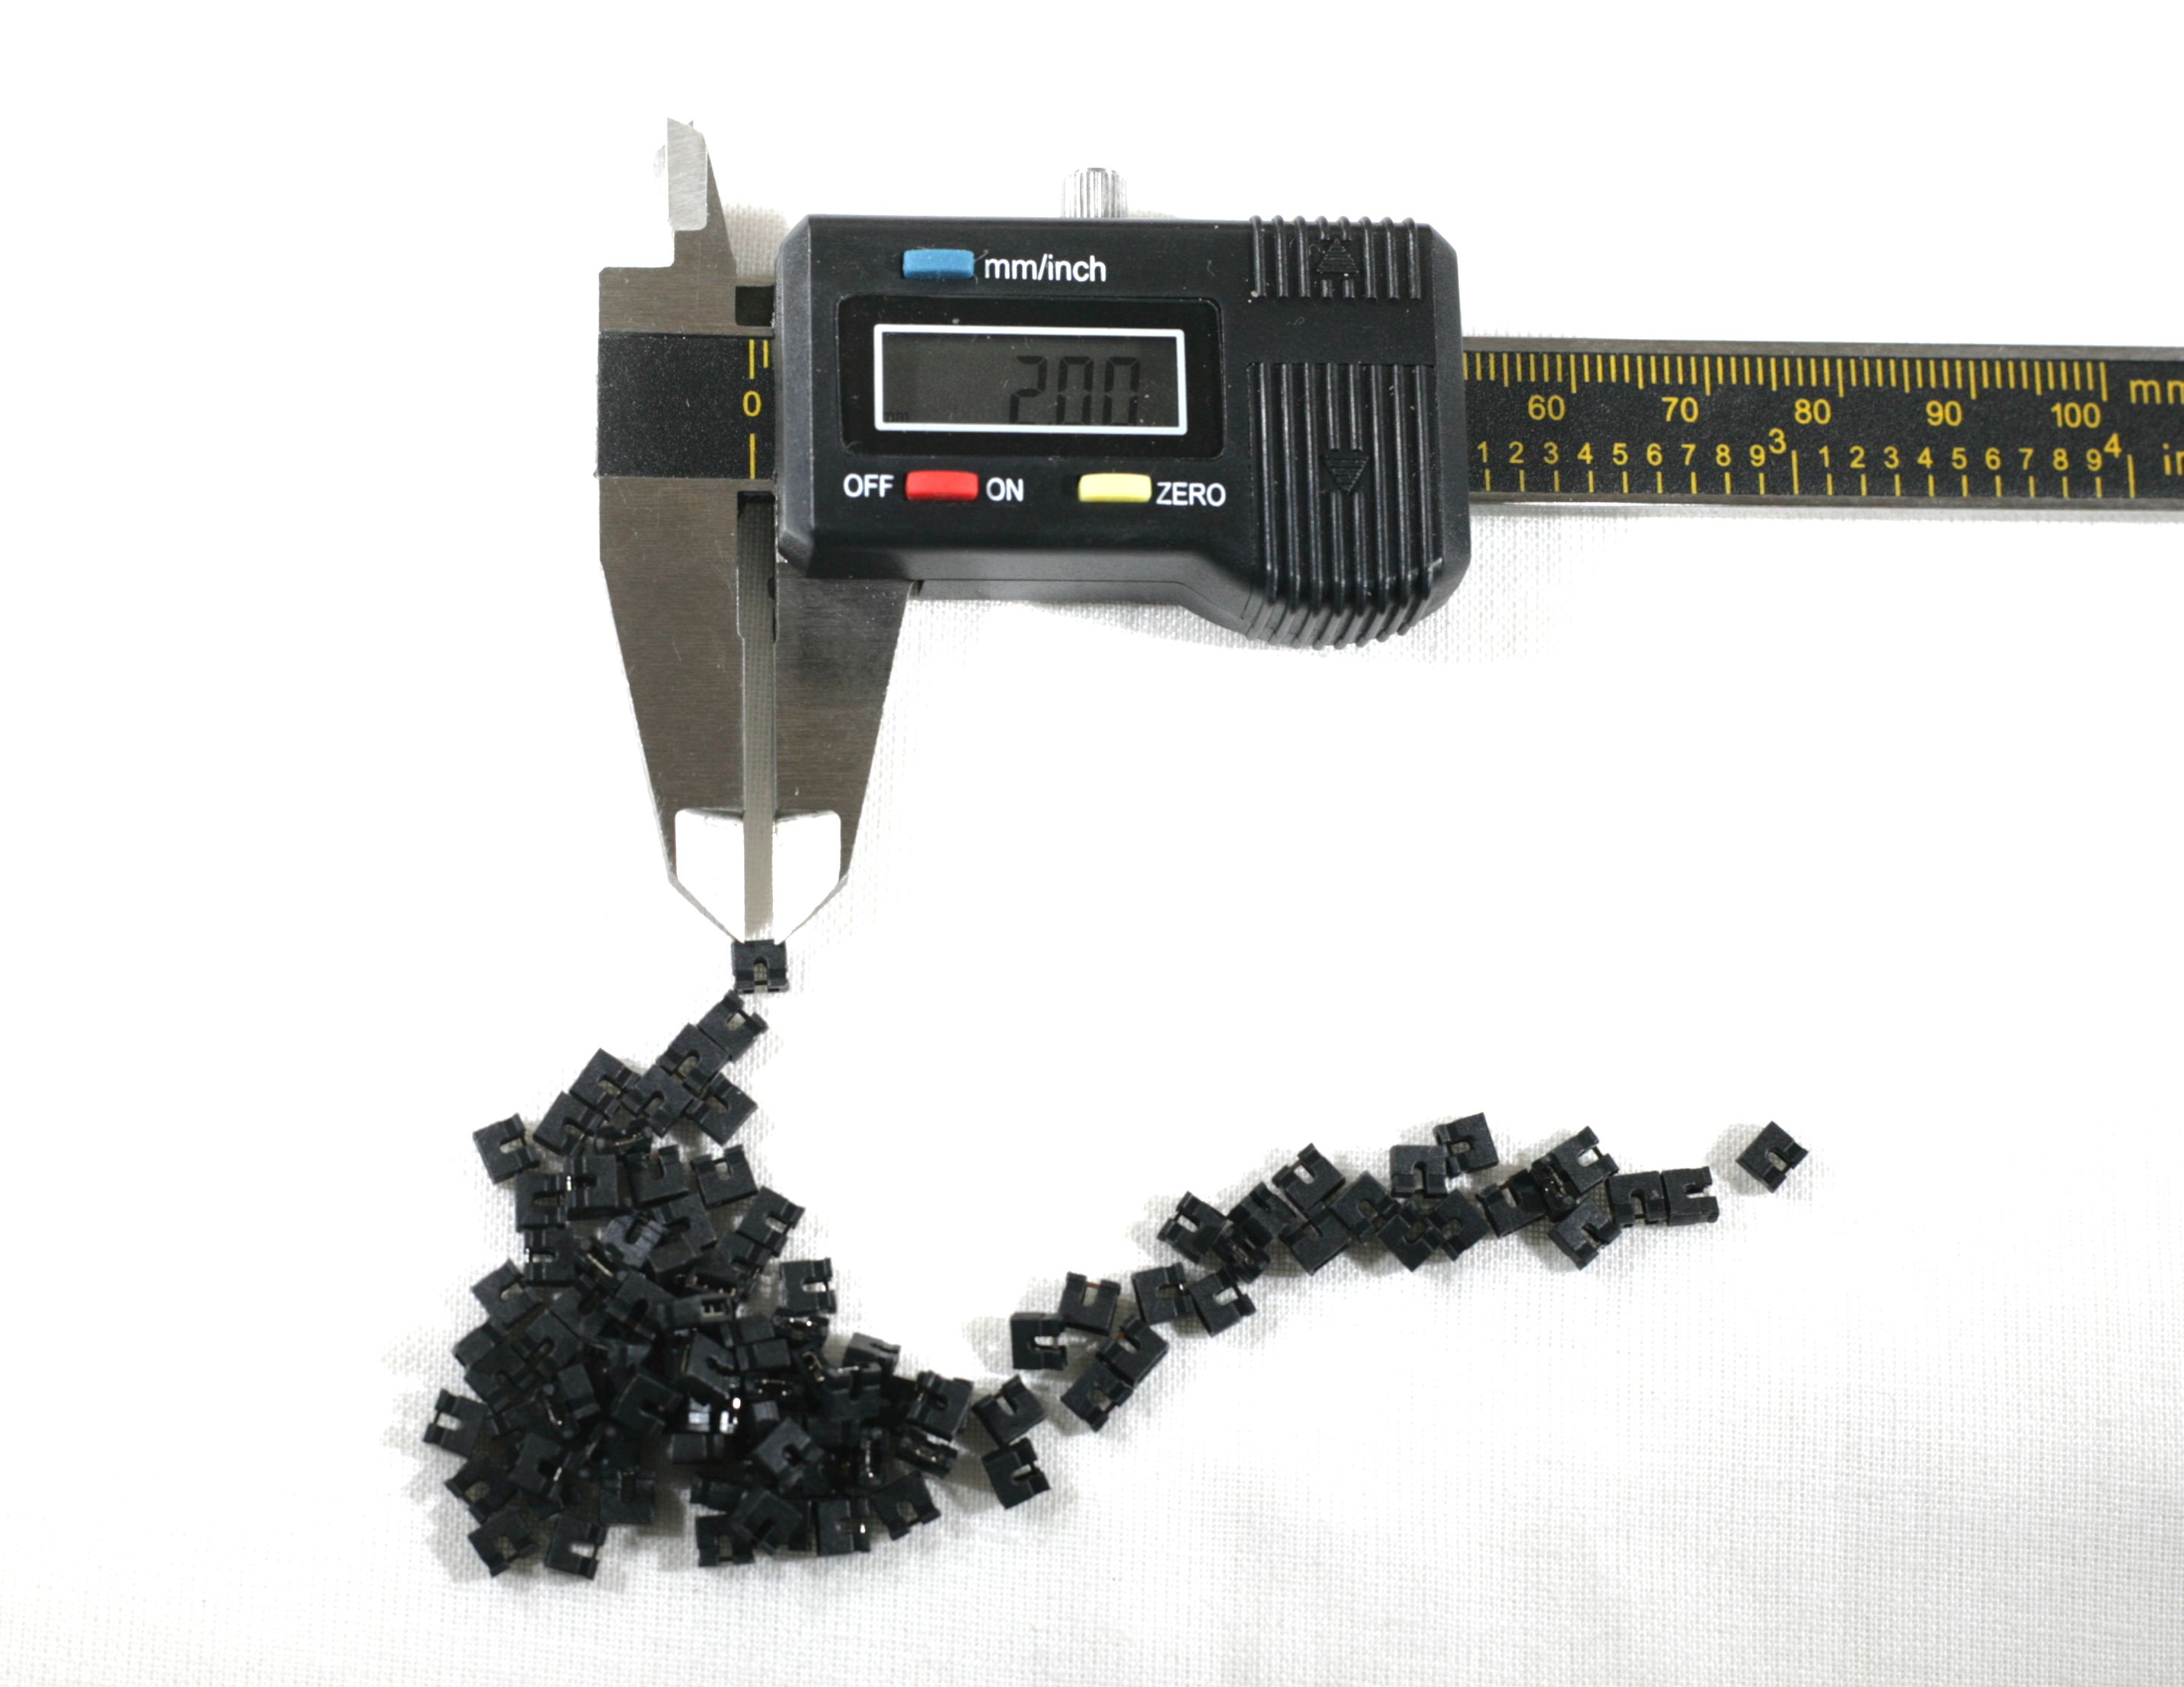 2.00 mm Bag 100 Shunt with Measurement